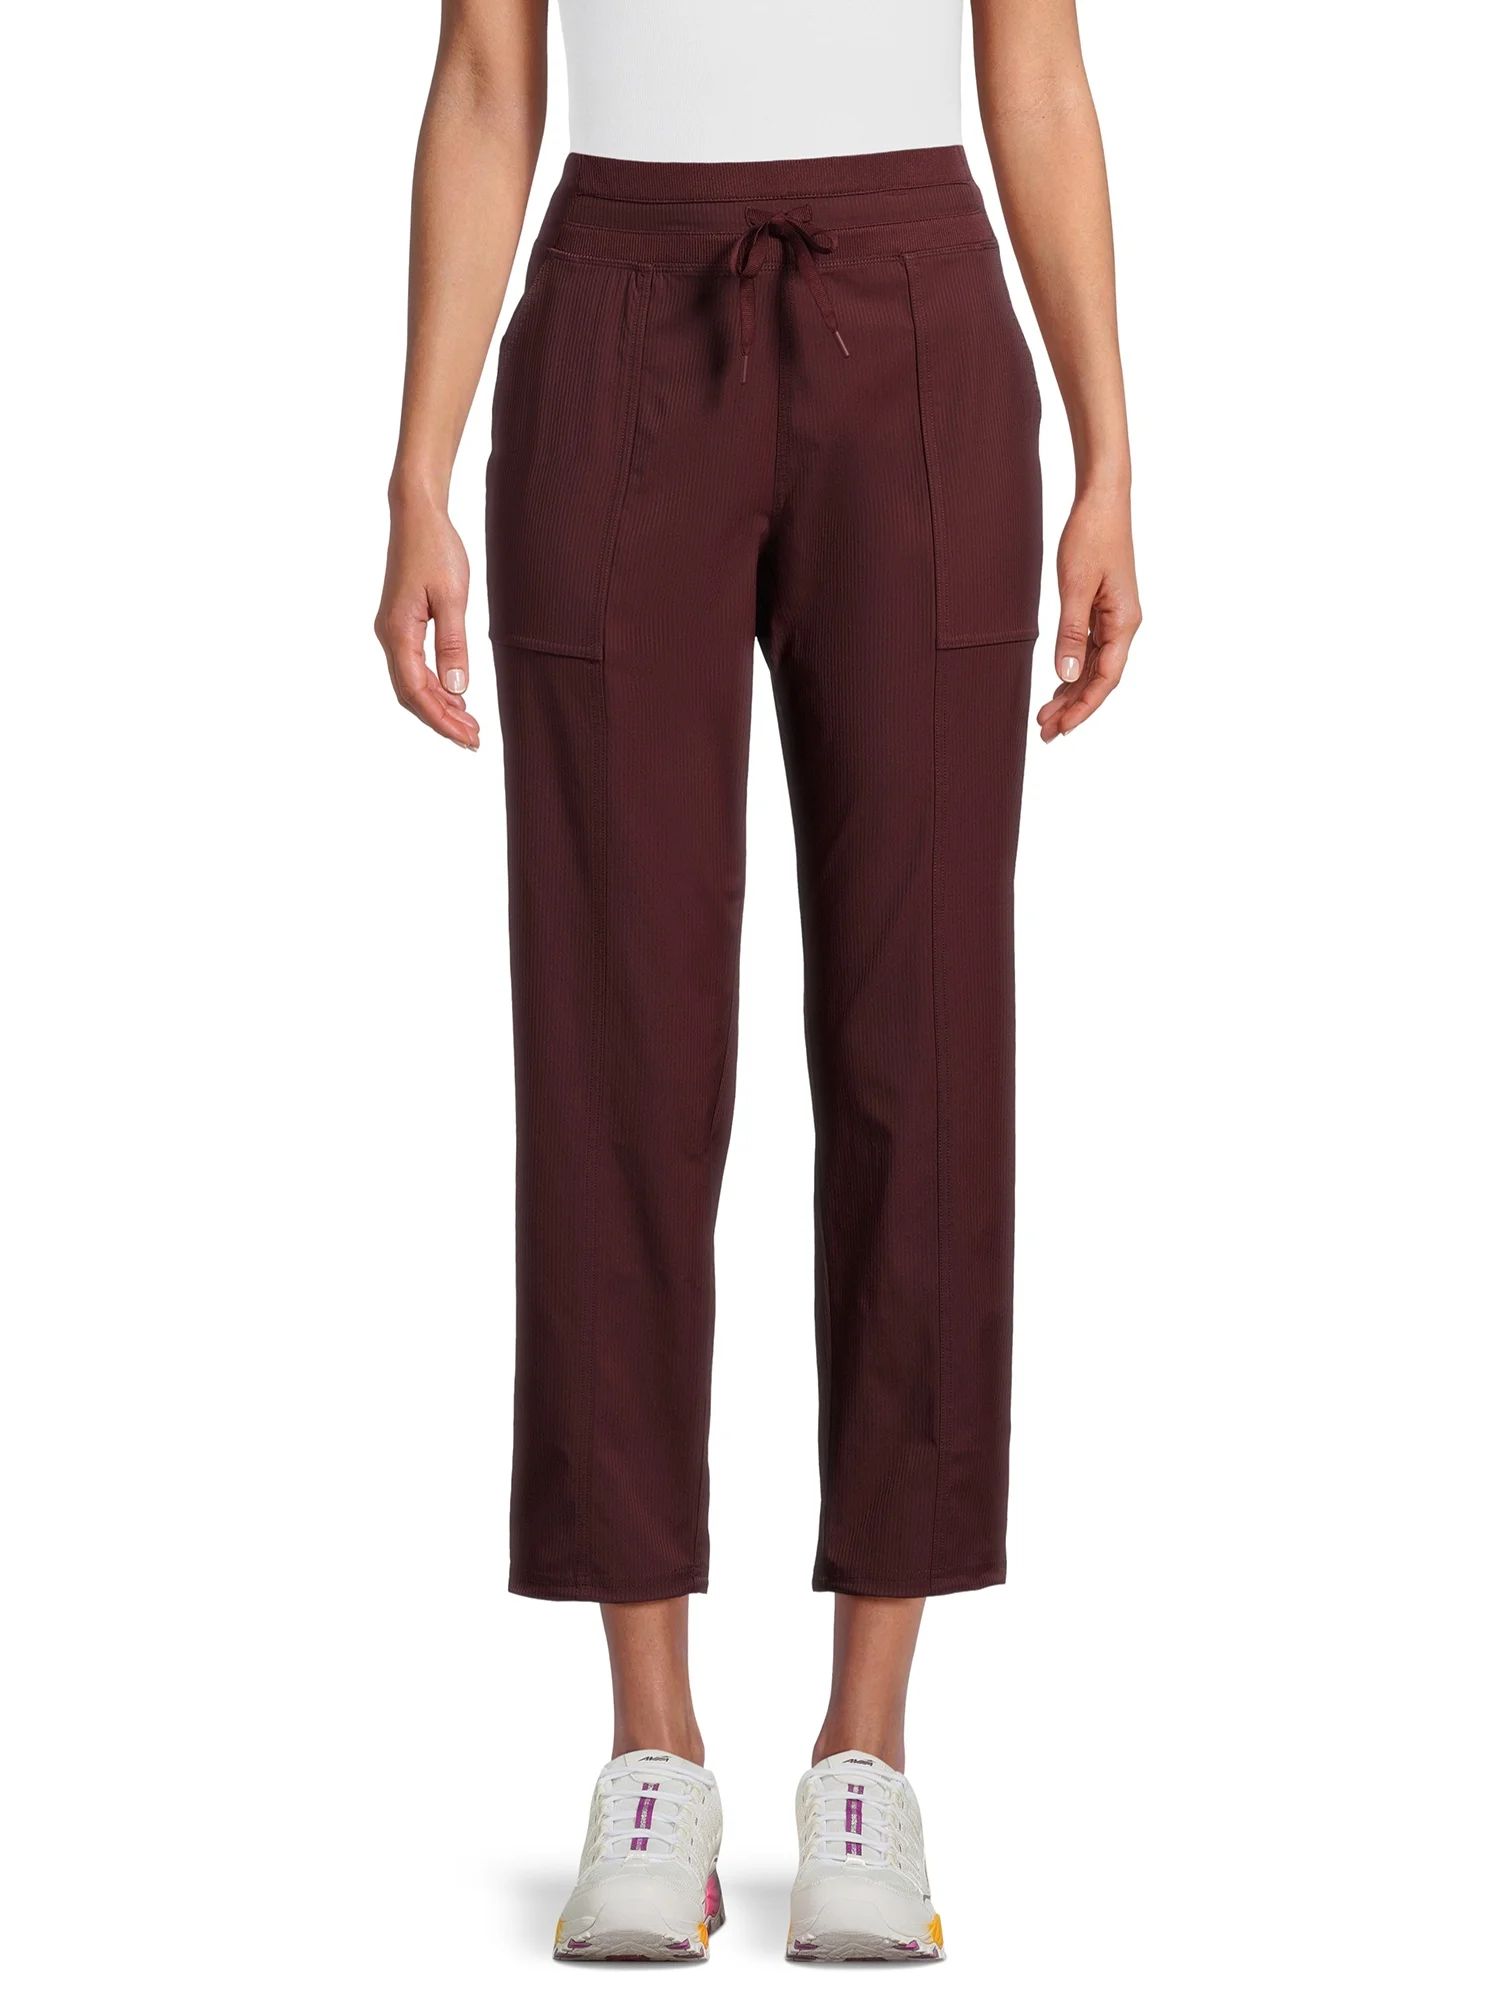 Avia Women's Pull On Commuter Pants, 27.5” Inseam, Sizes XS-XXXL | Walmart (US)